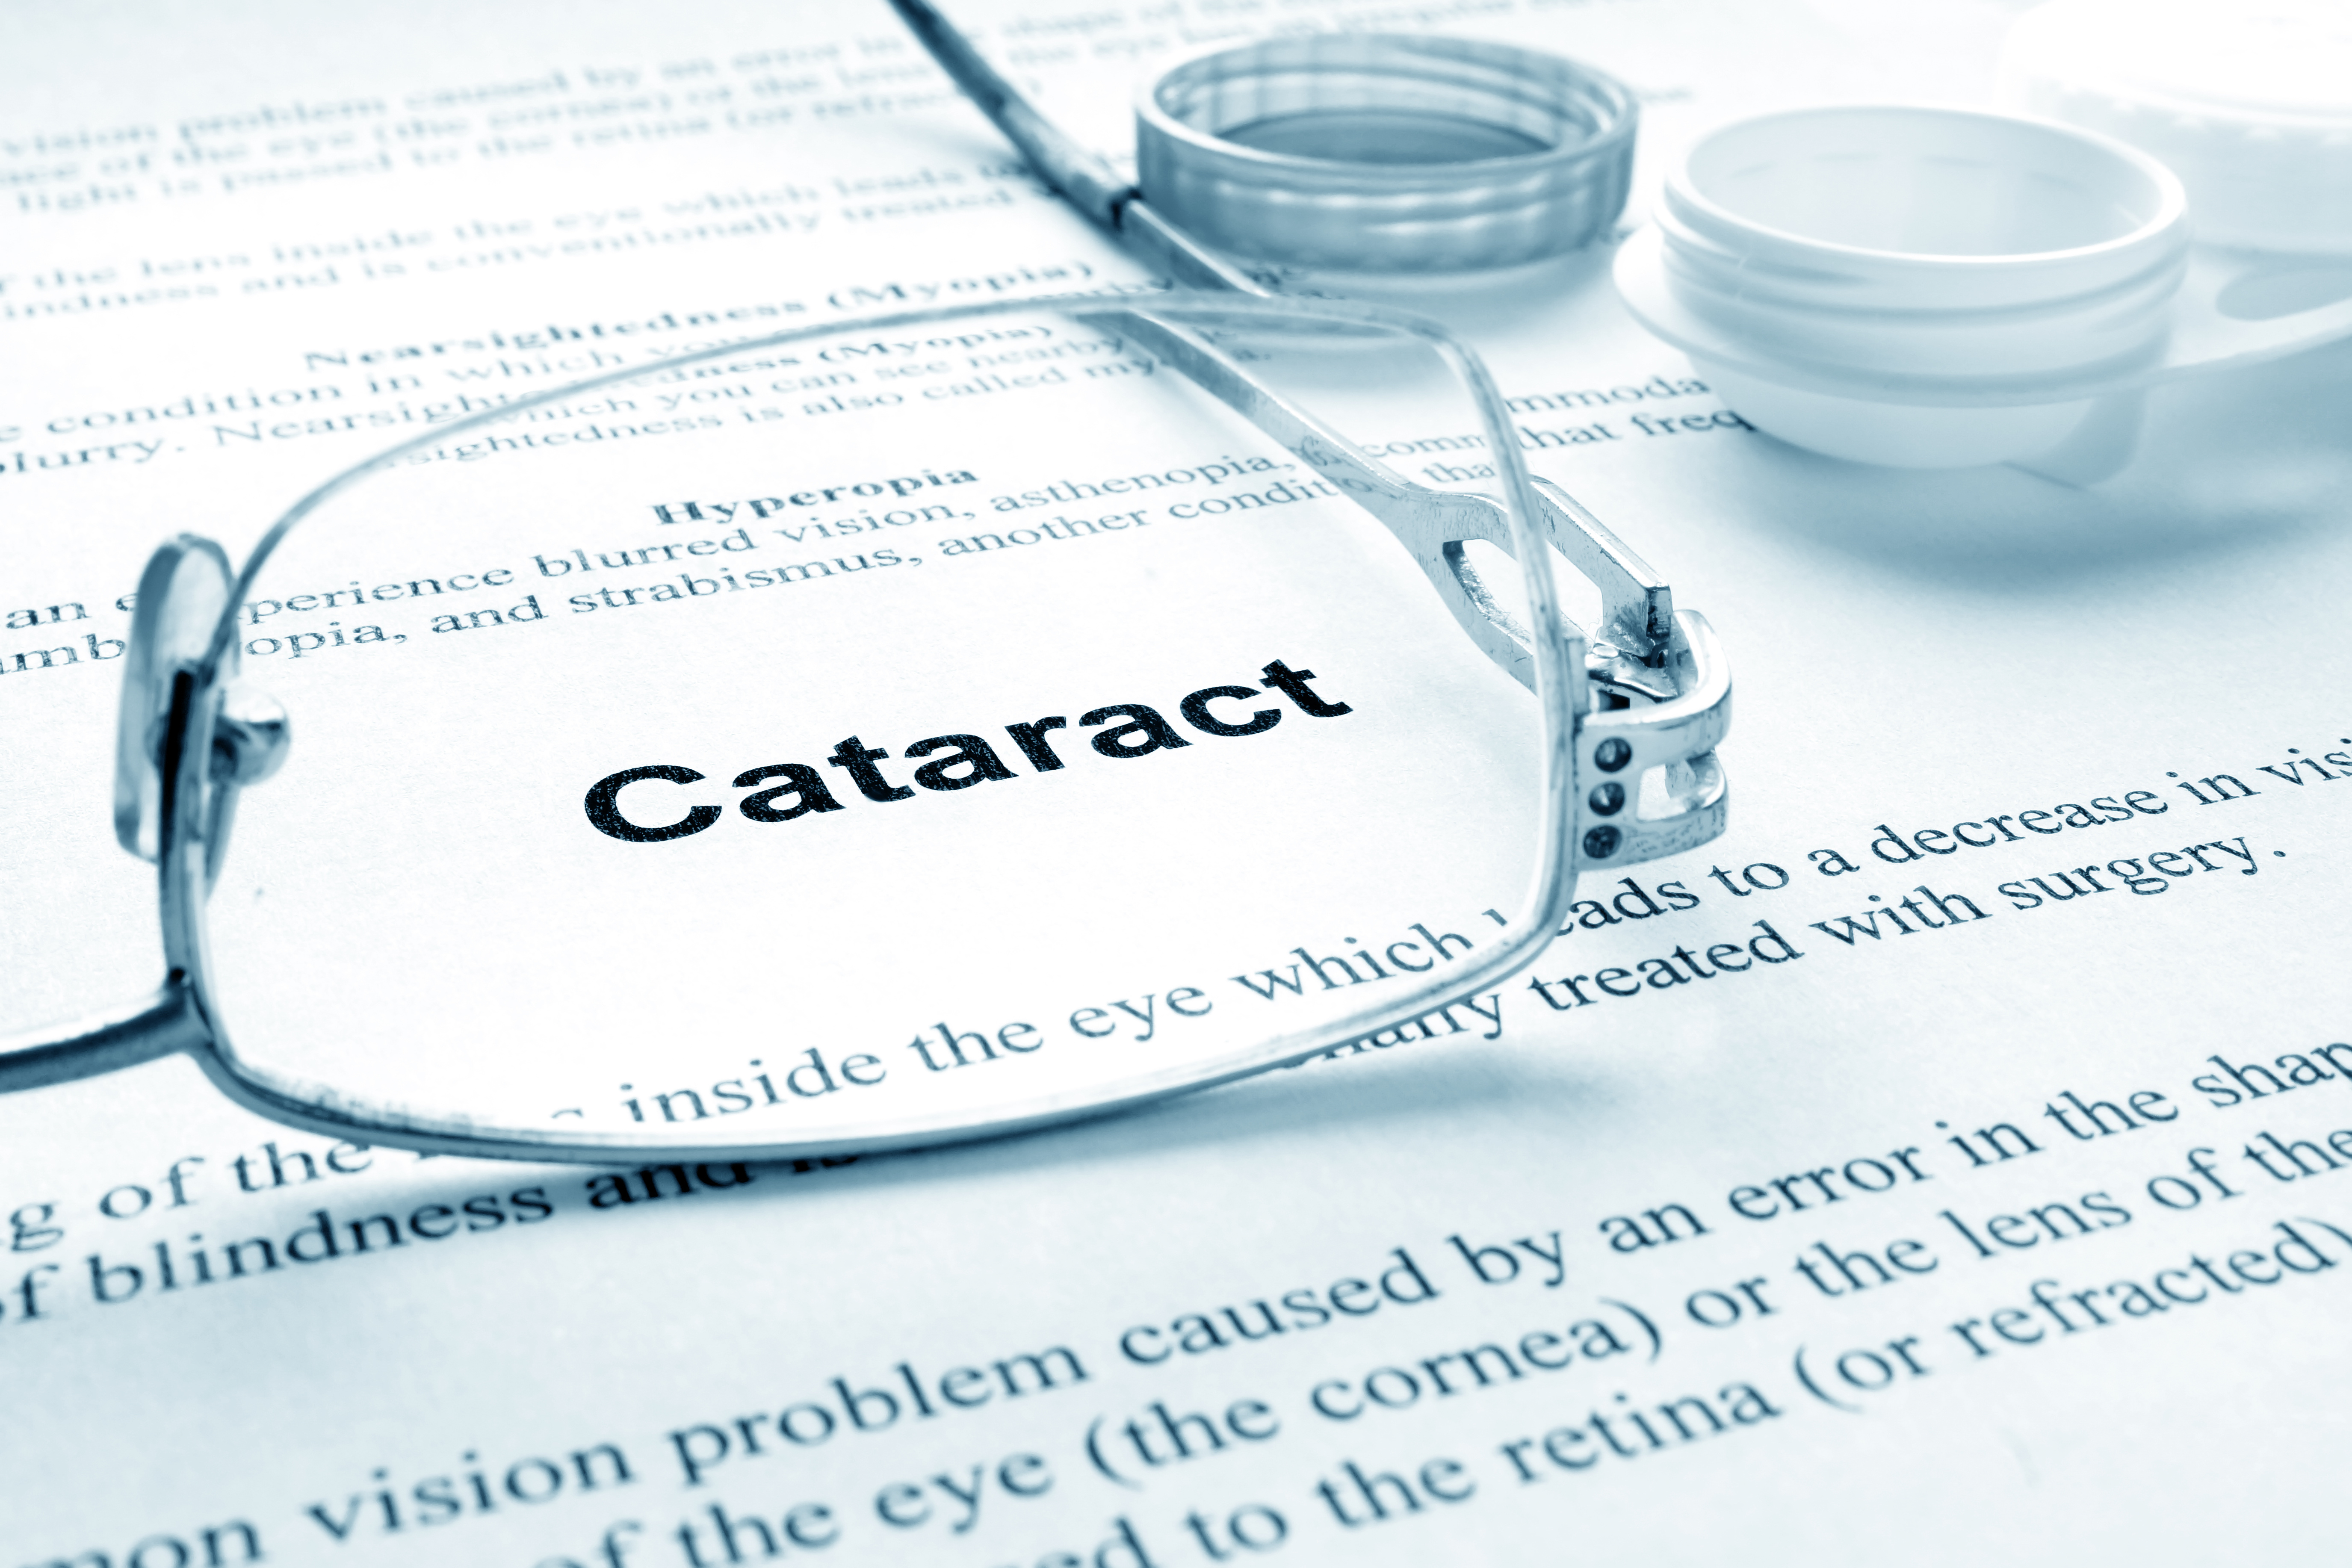 How to treat cataracts